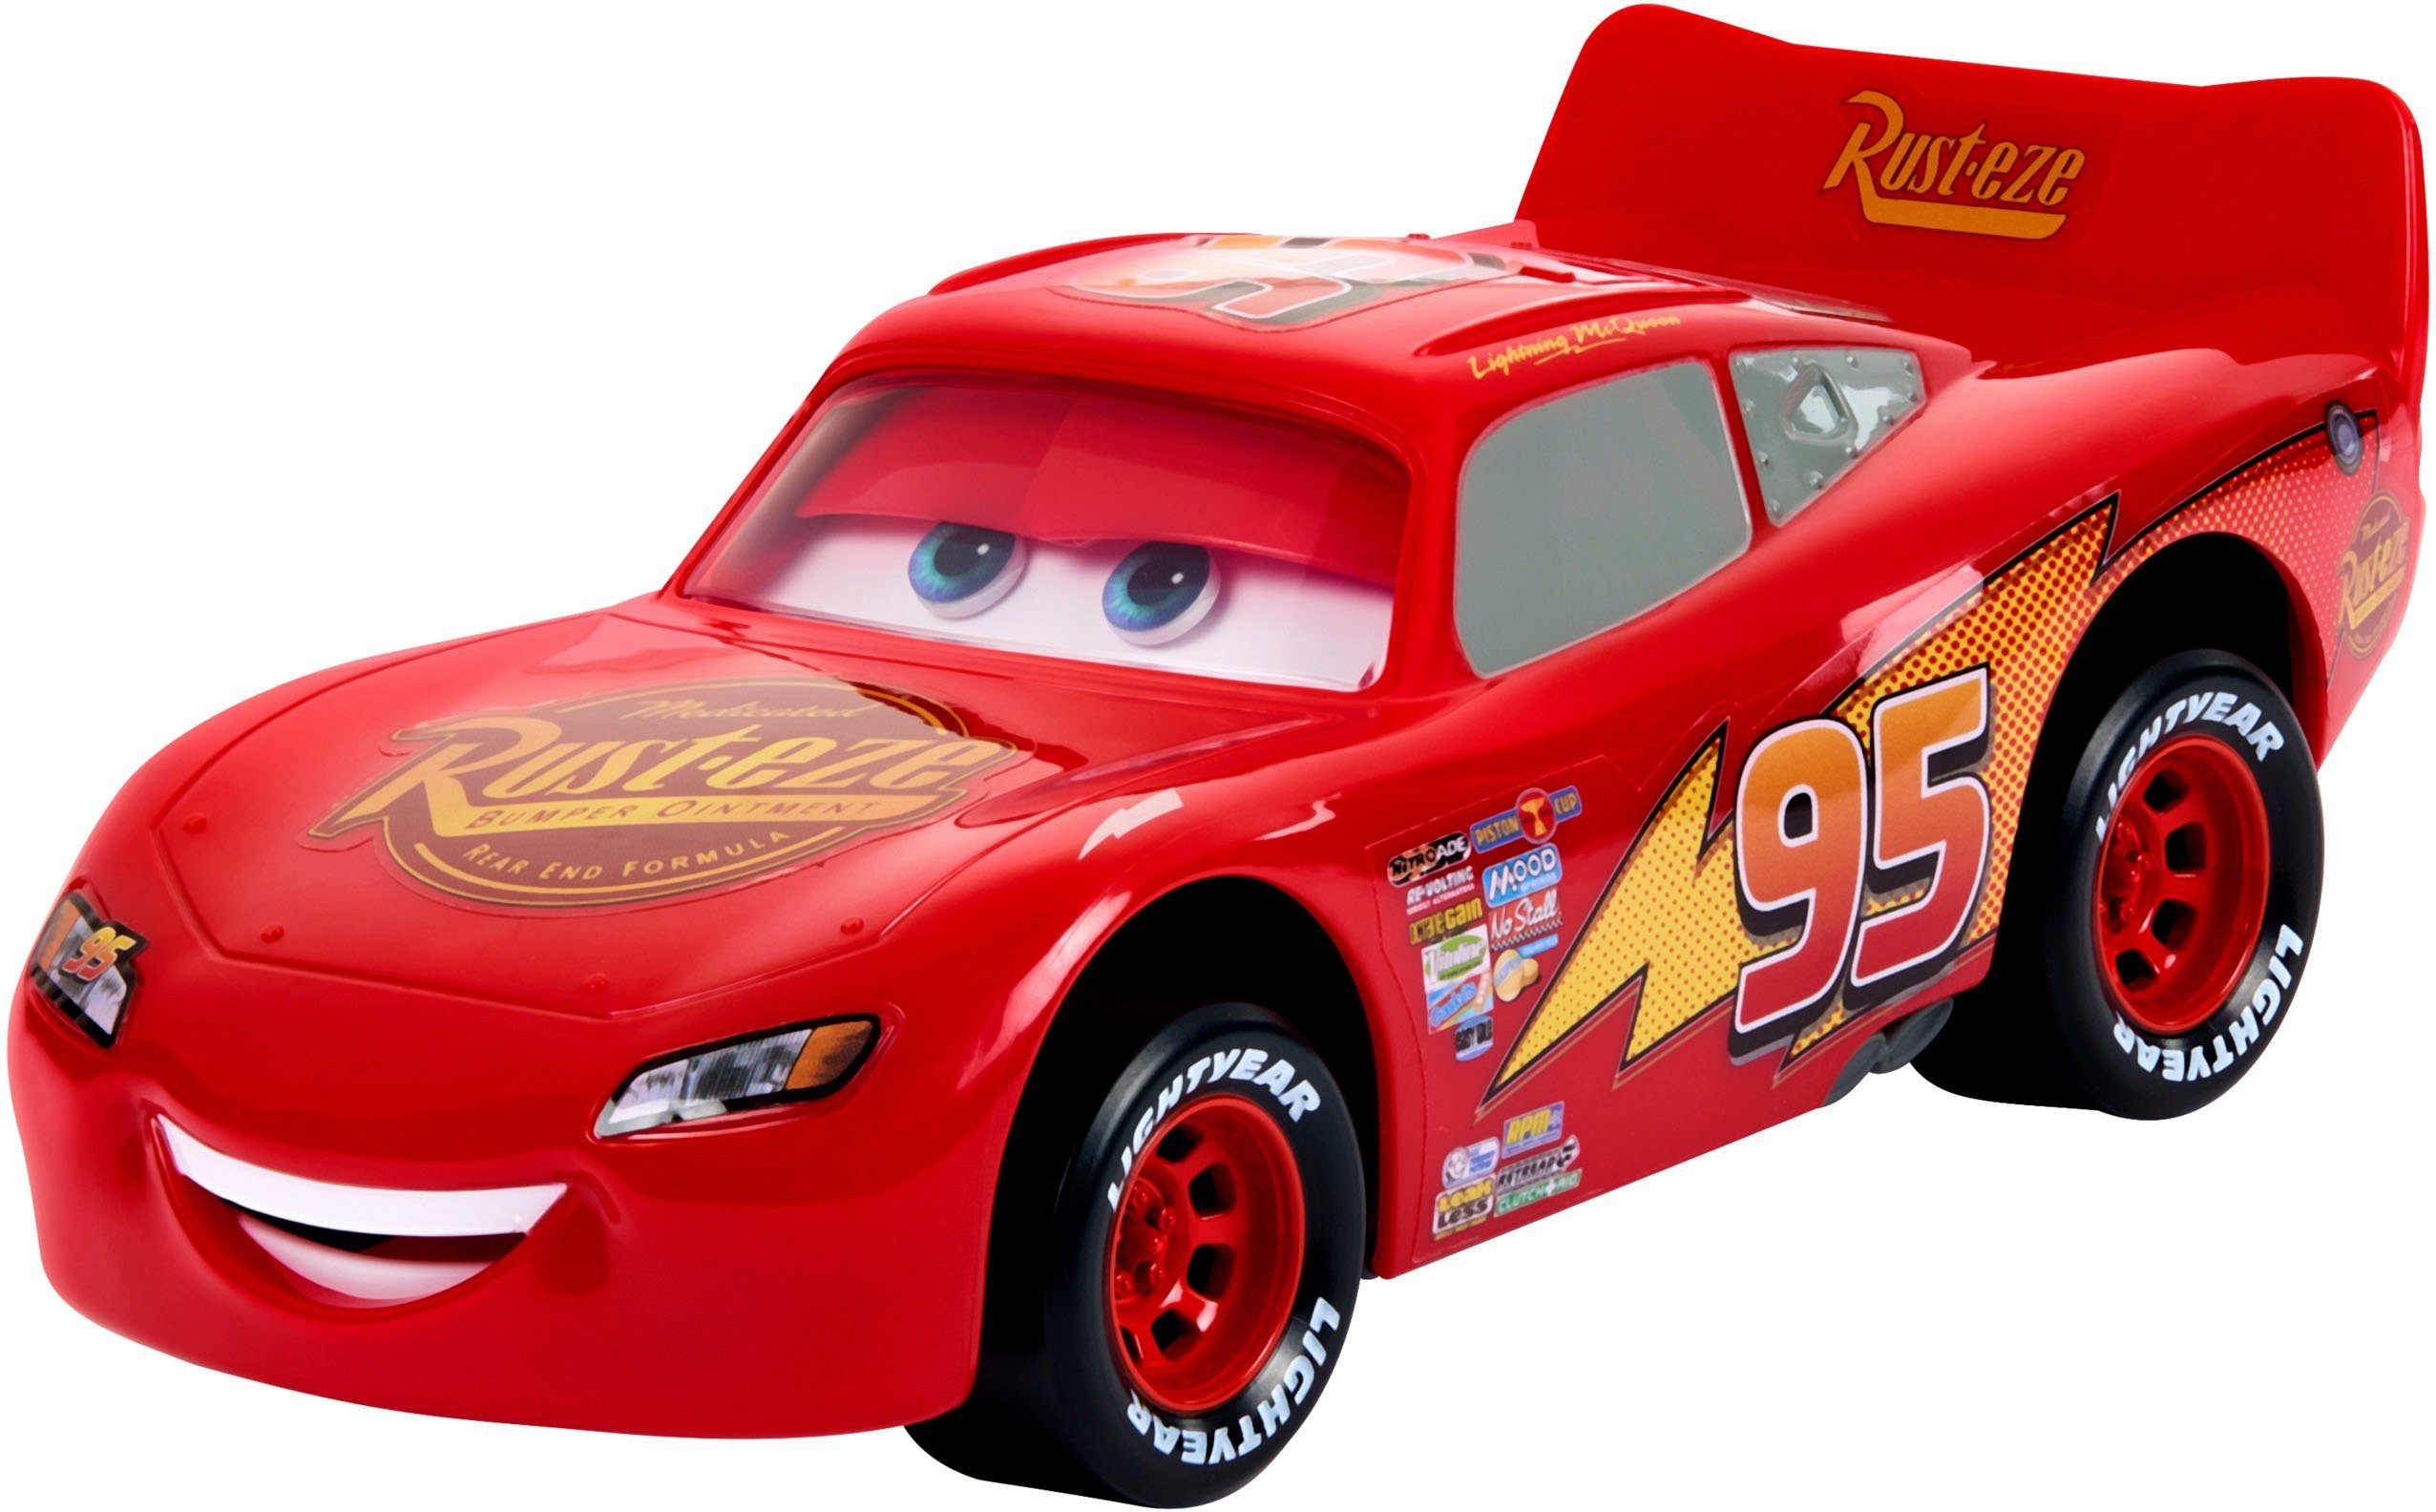 Mattel® Spielzeug-Auto Disney Pixar Cars Lightning Moving McQueen Moments